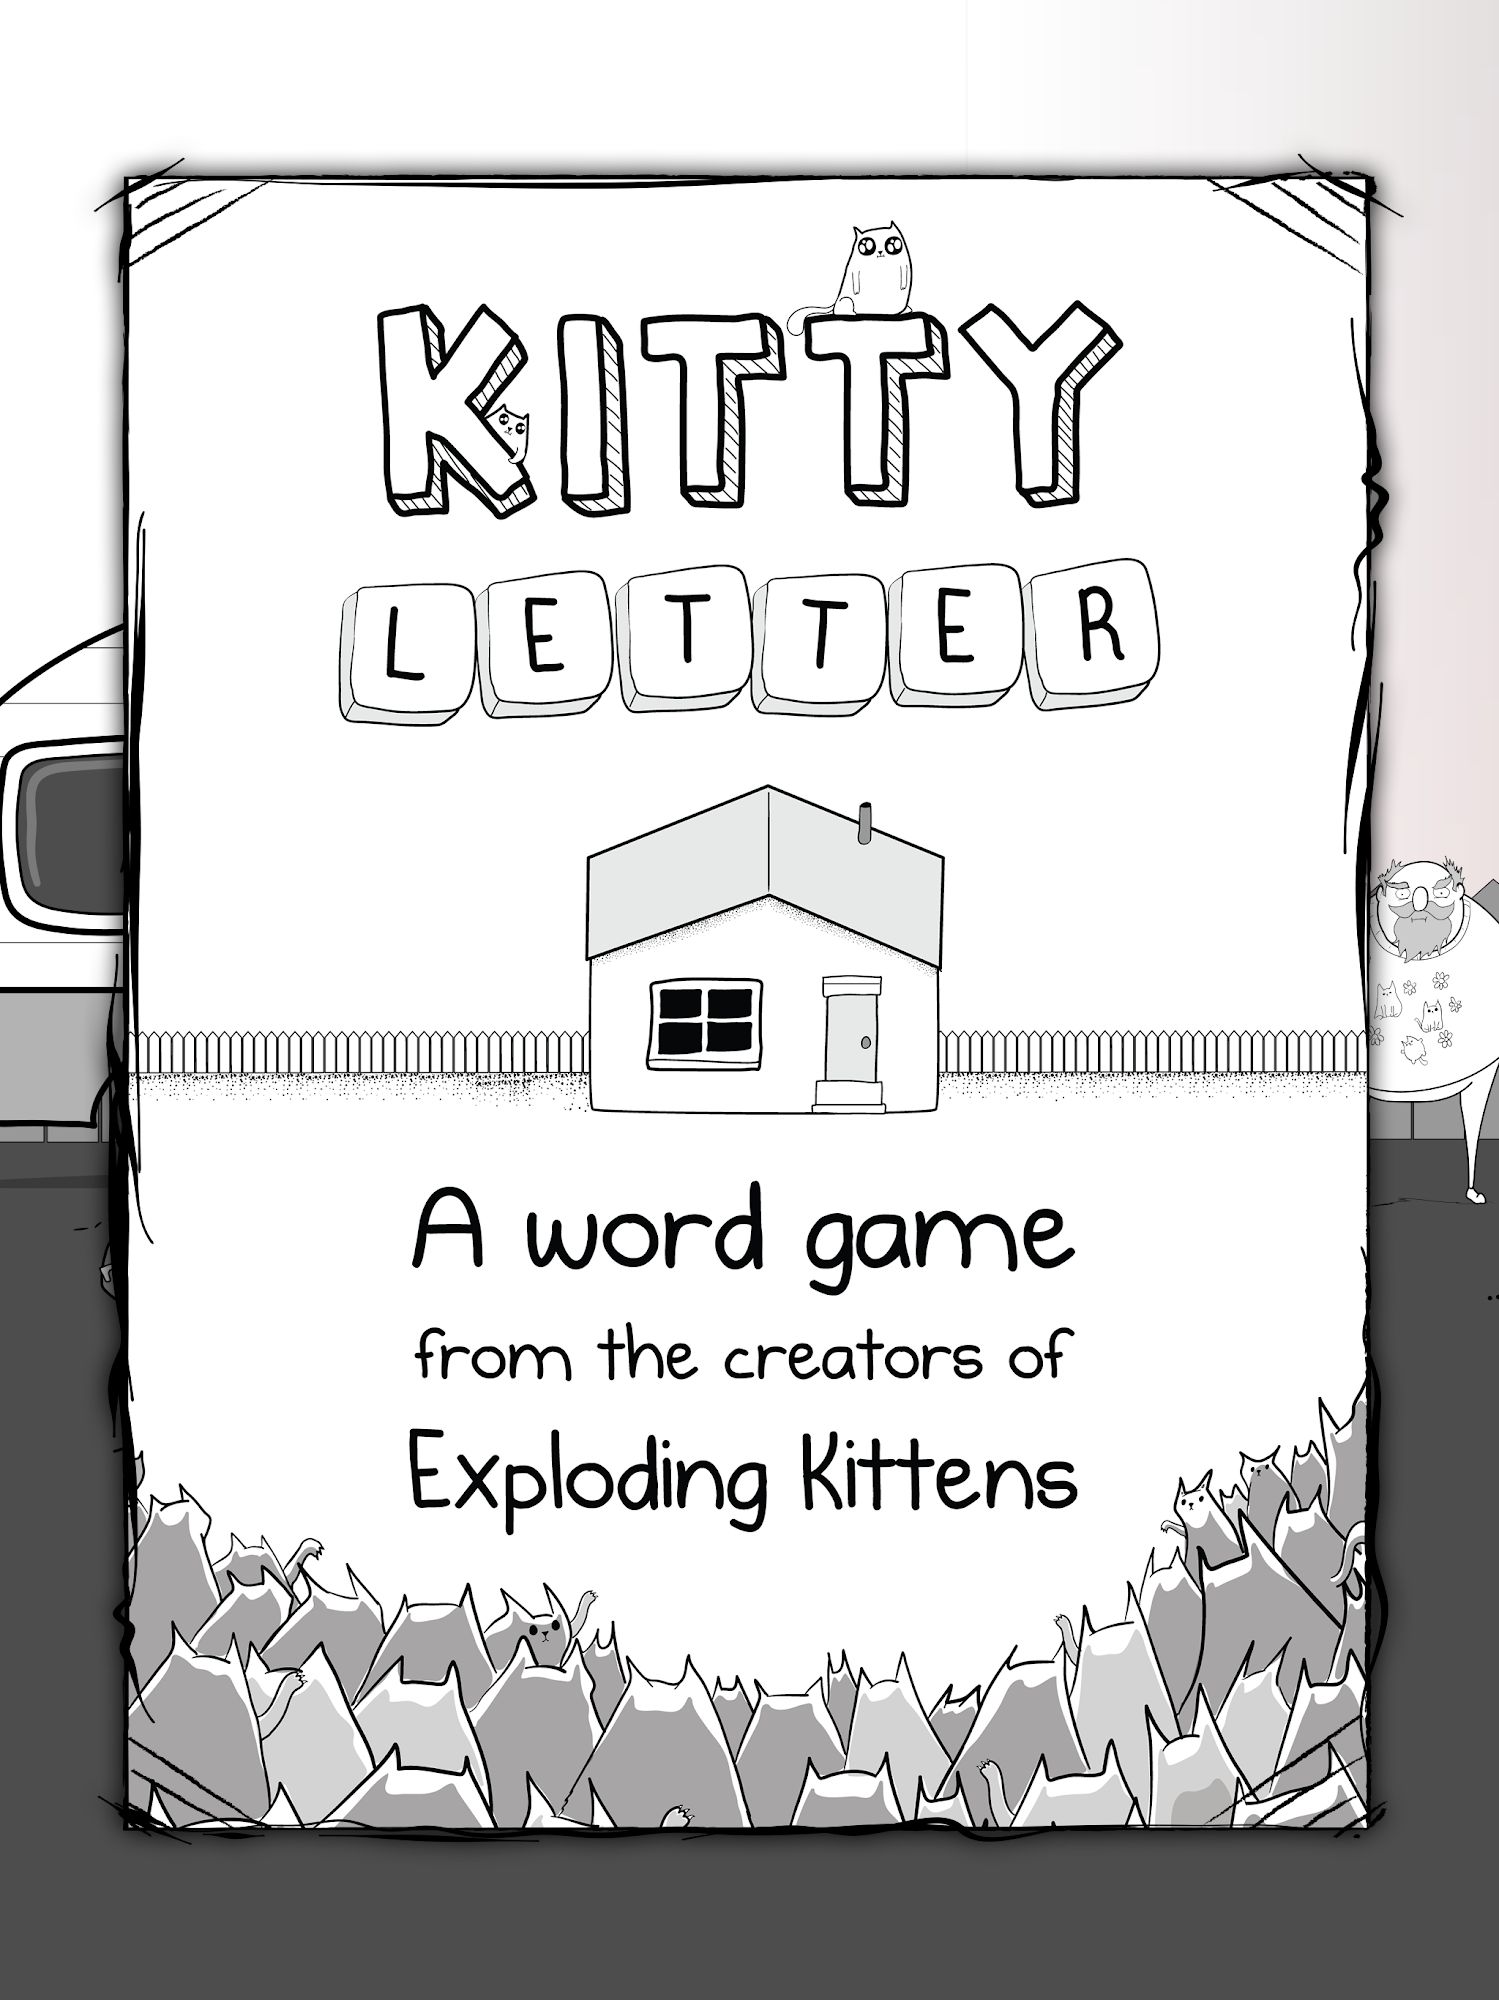 Скачать Kitty Letter: Android Аркады игра на телефон и планшет.